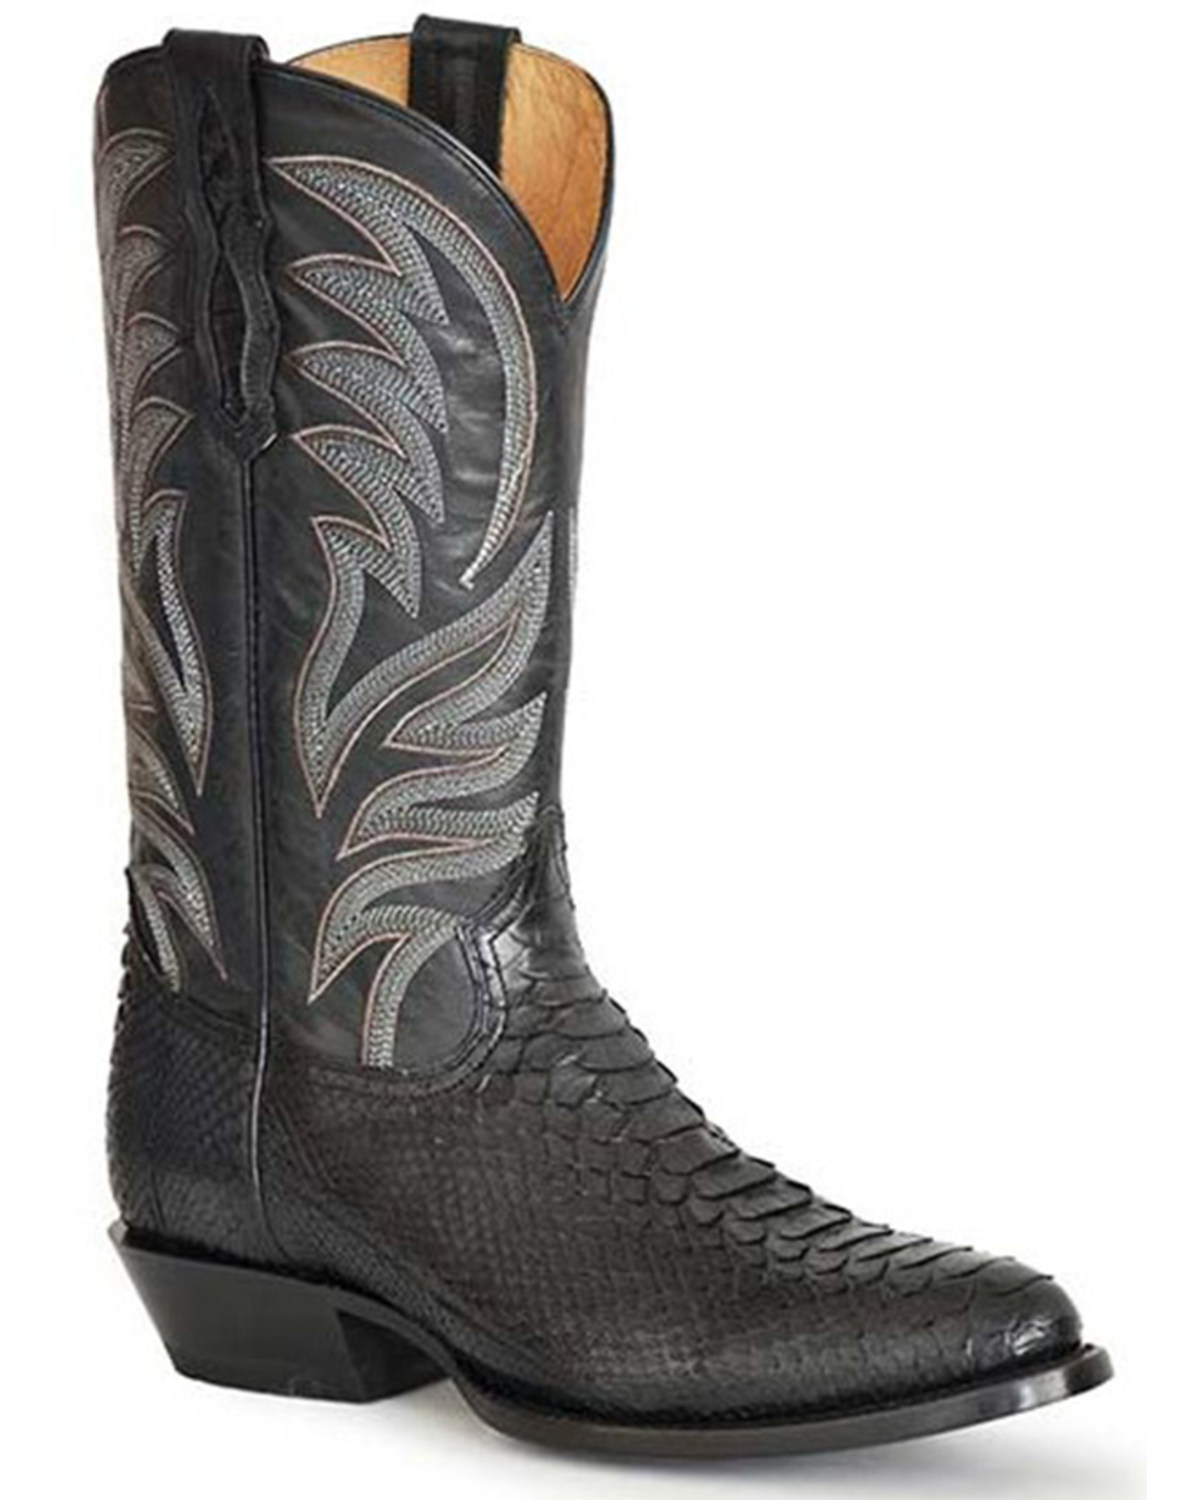 Roper Men's Peyton Python Exotic Western Boots - Round Toe